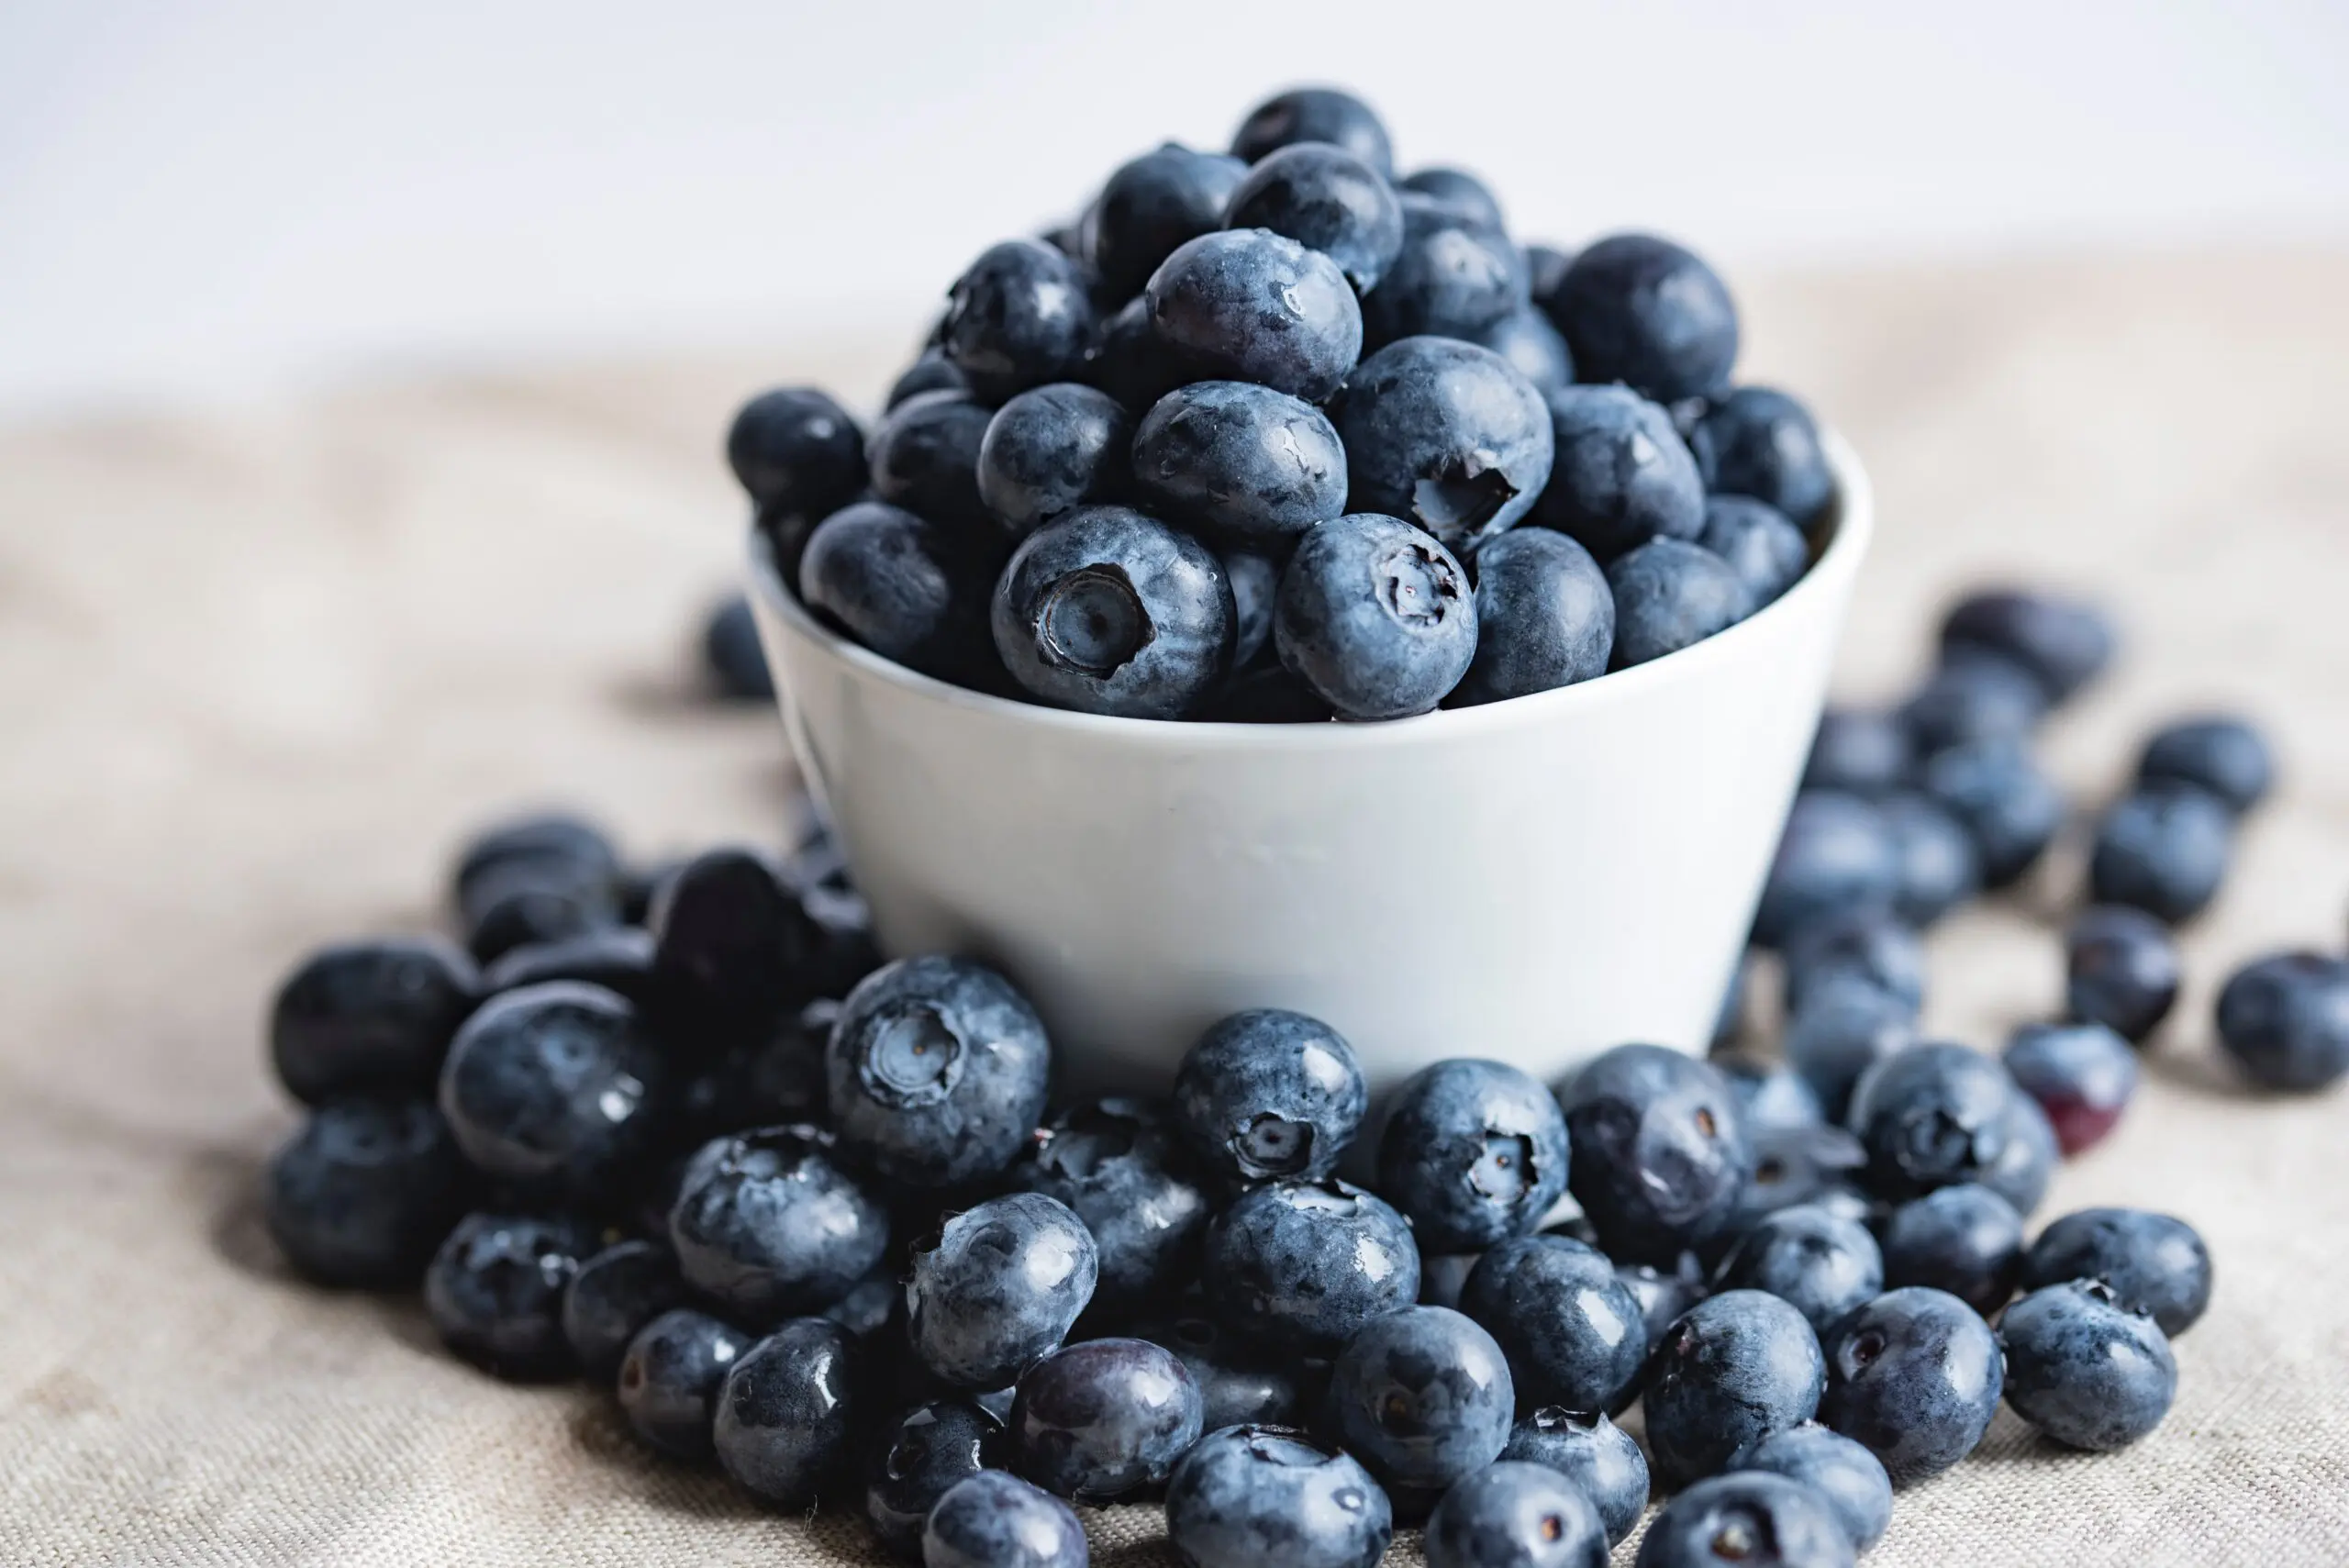 Blueberries are amazing vine fruit